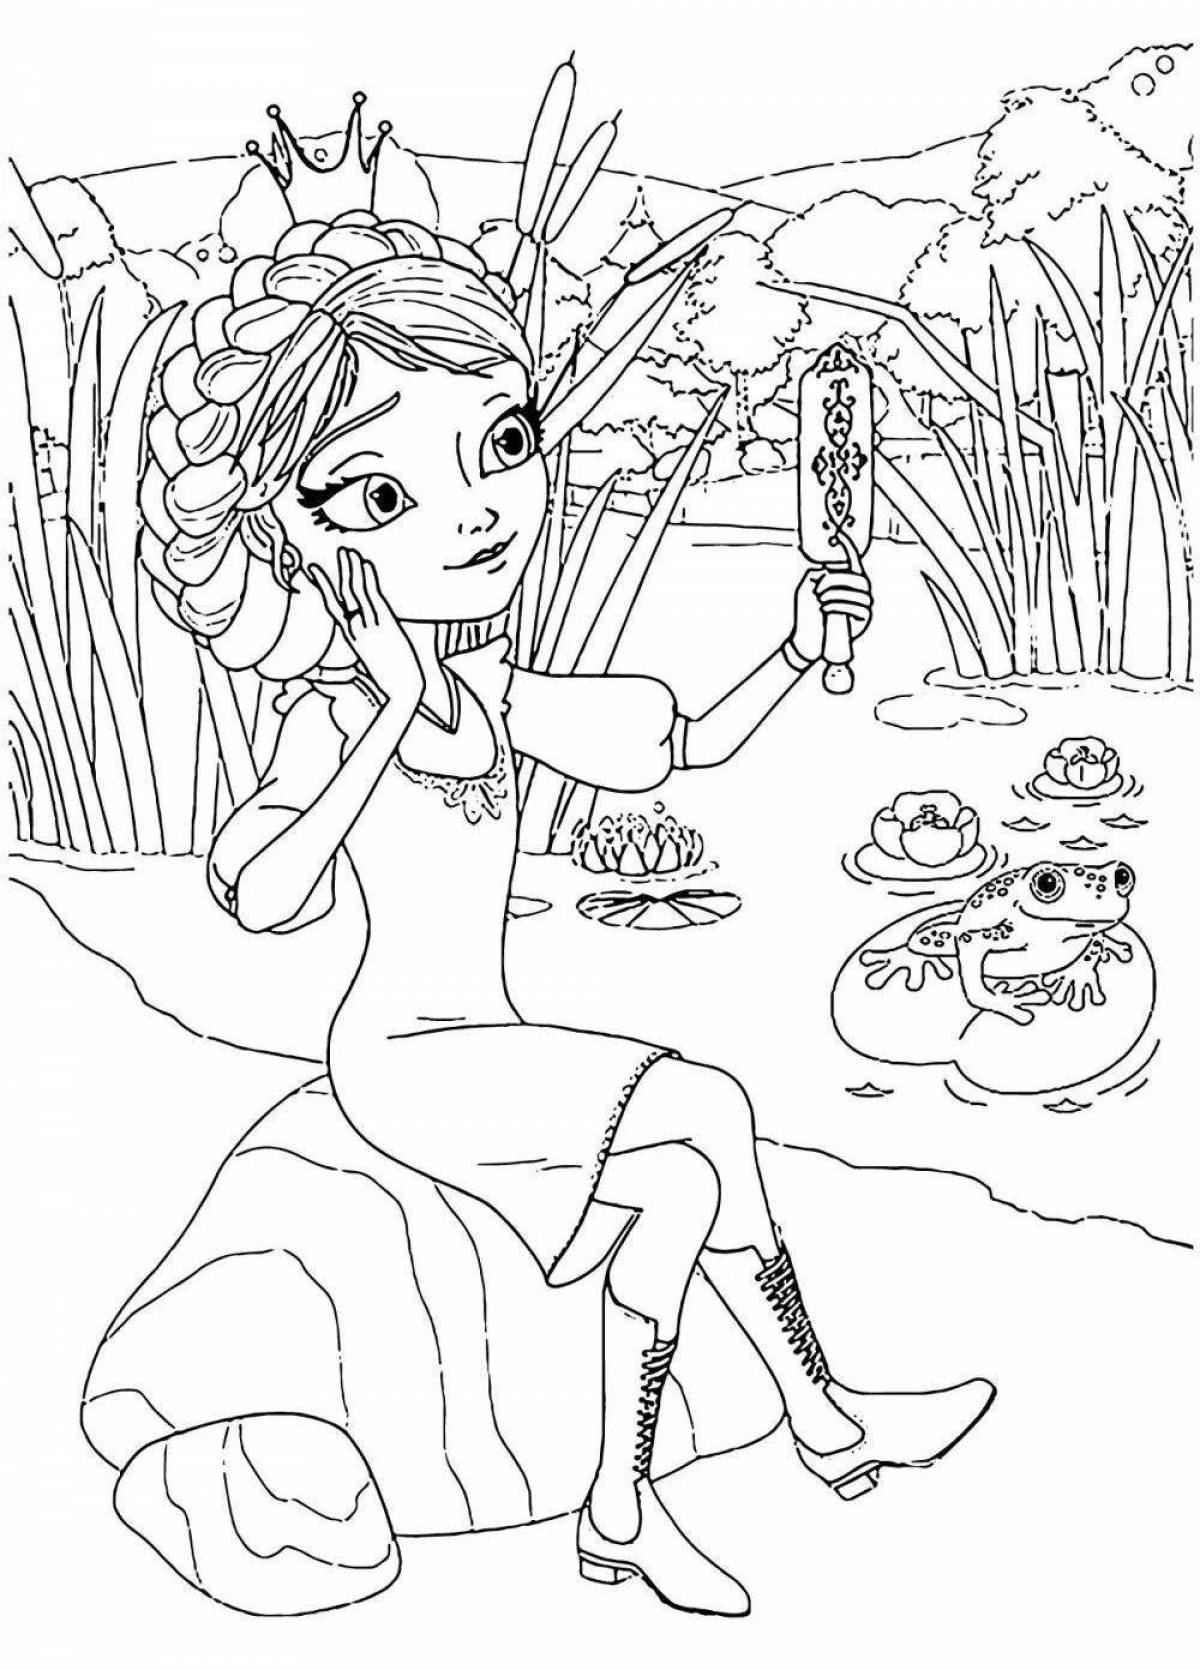 Adorable cartoon princess coloring book